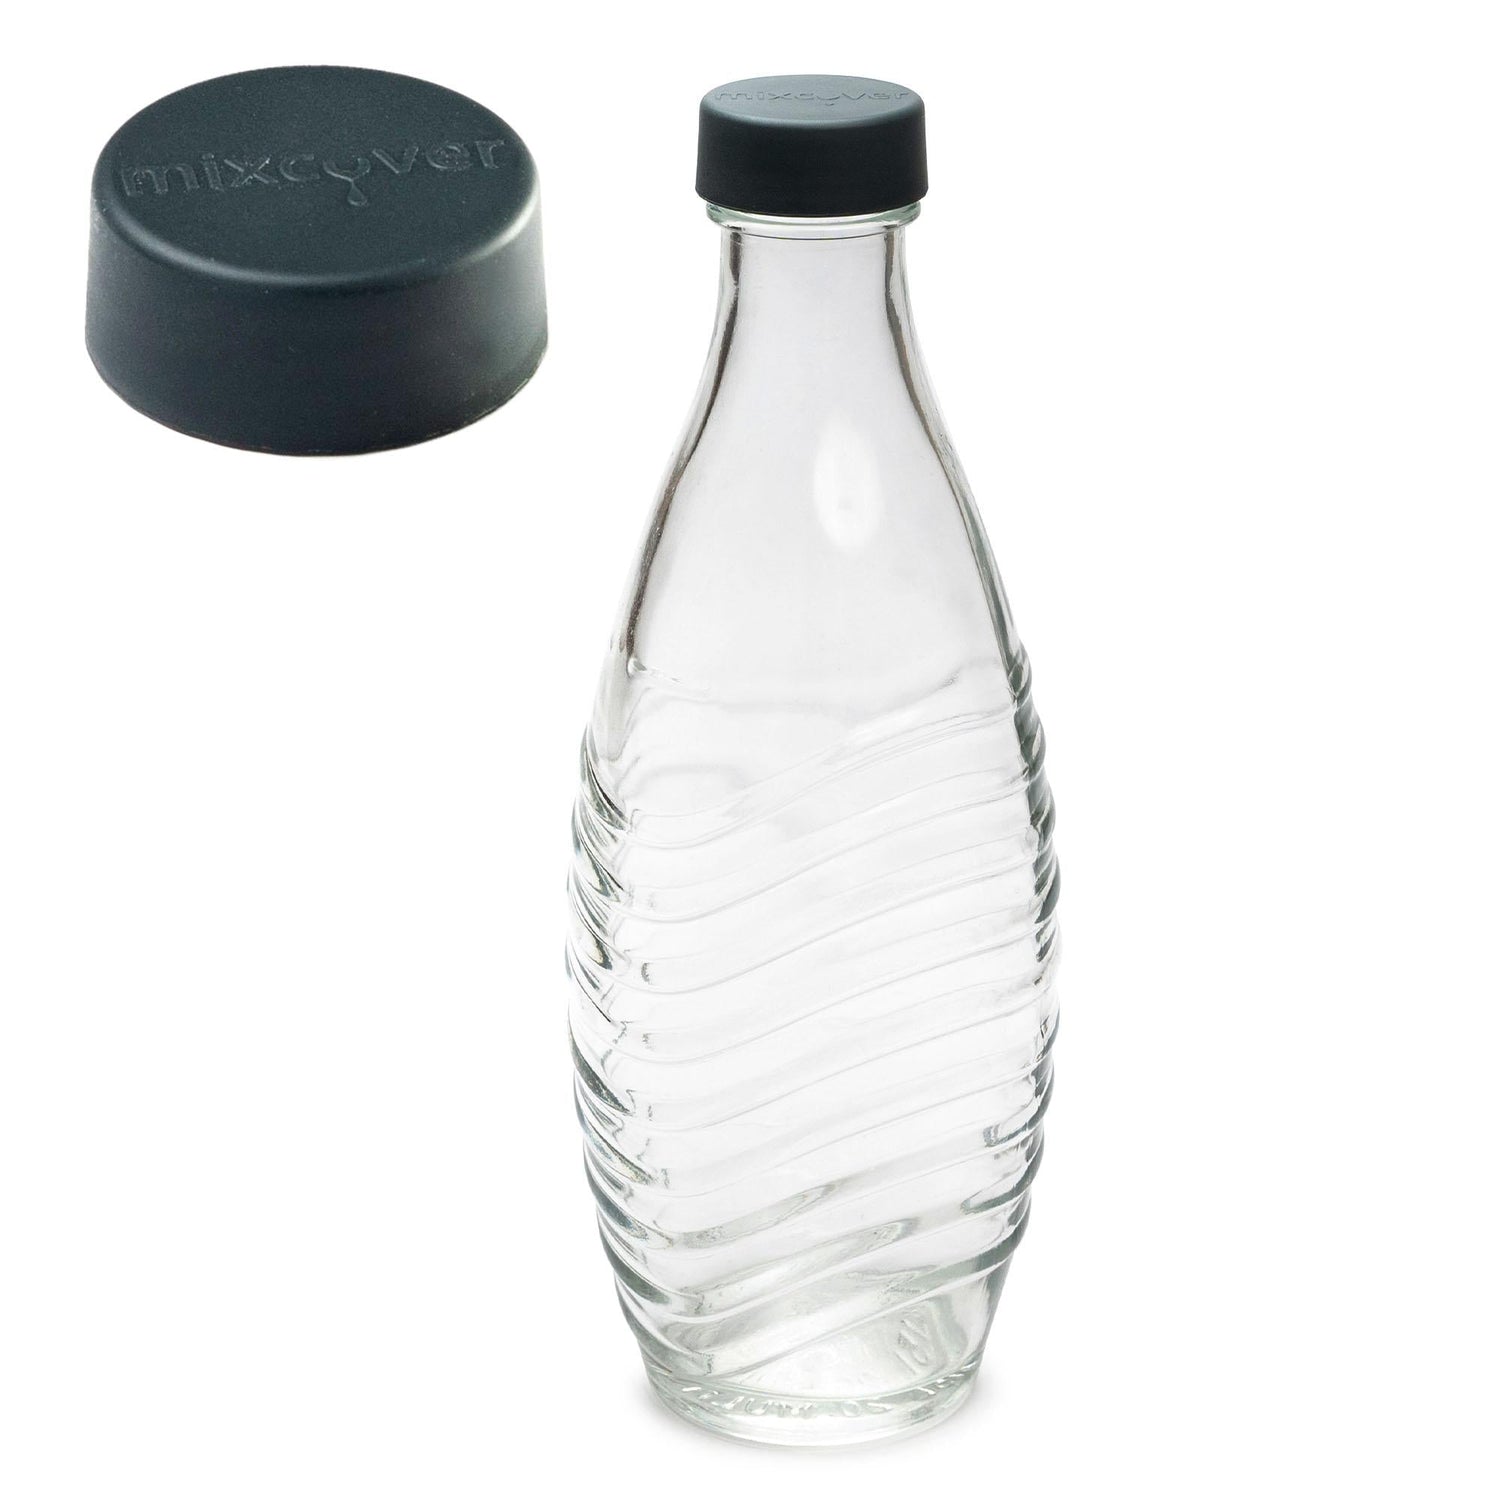 Mixcover Bouteille en verre compatible avec Sodastream Crystal 2.0